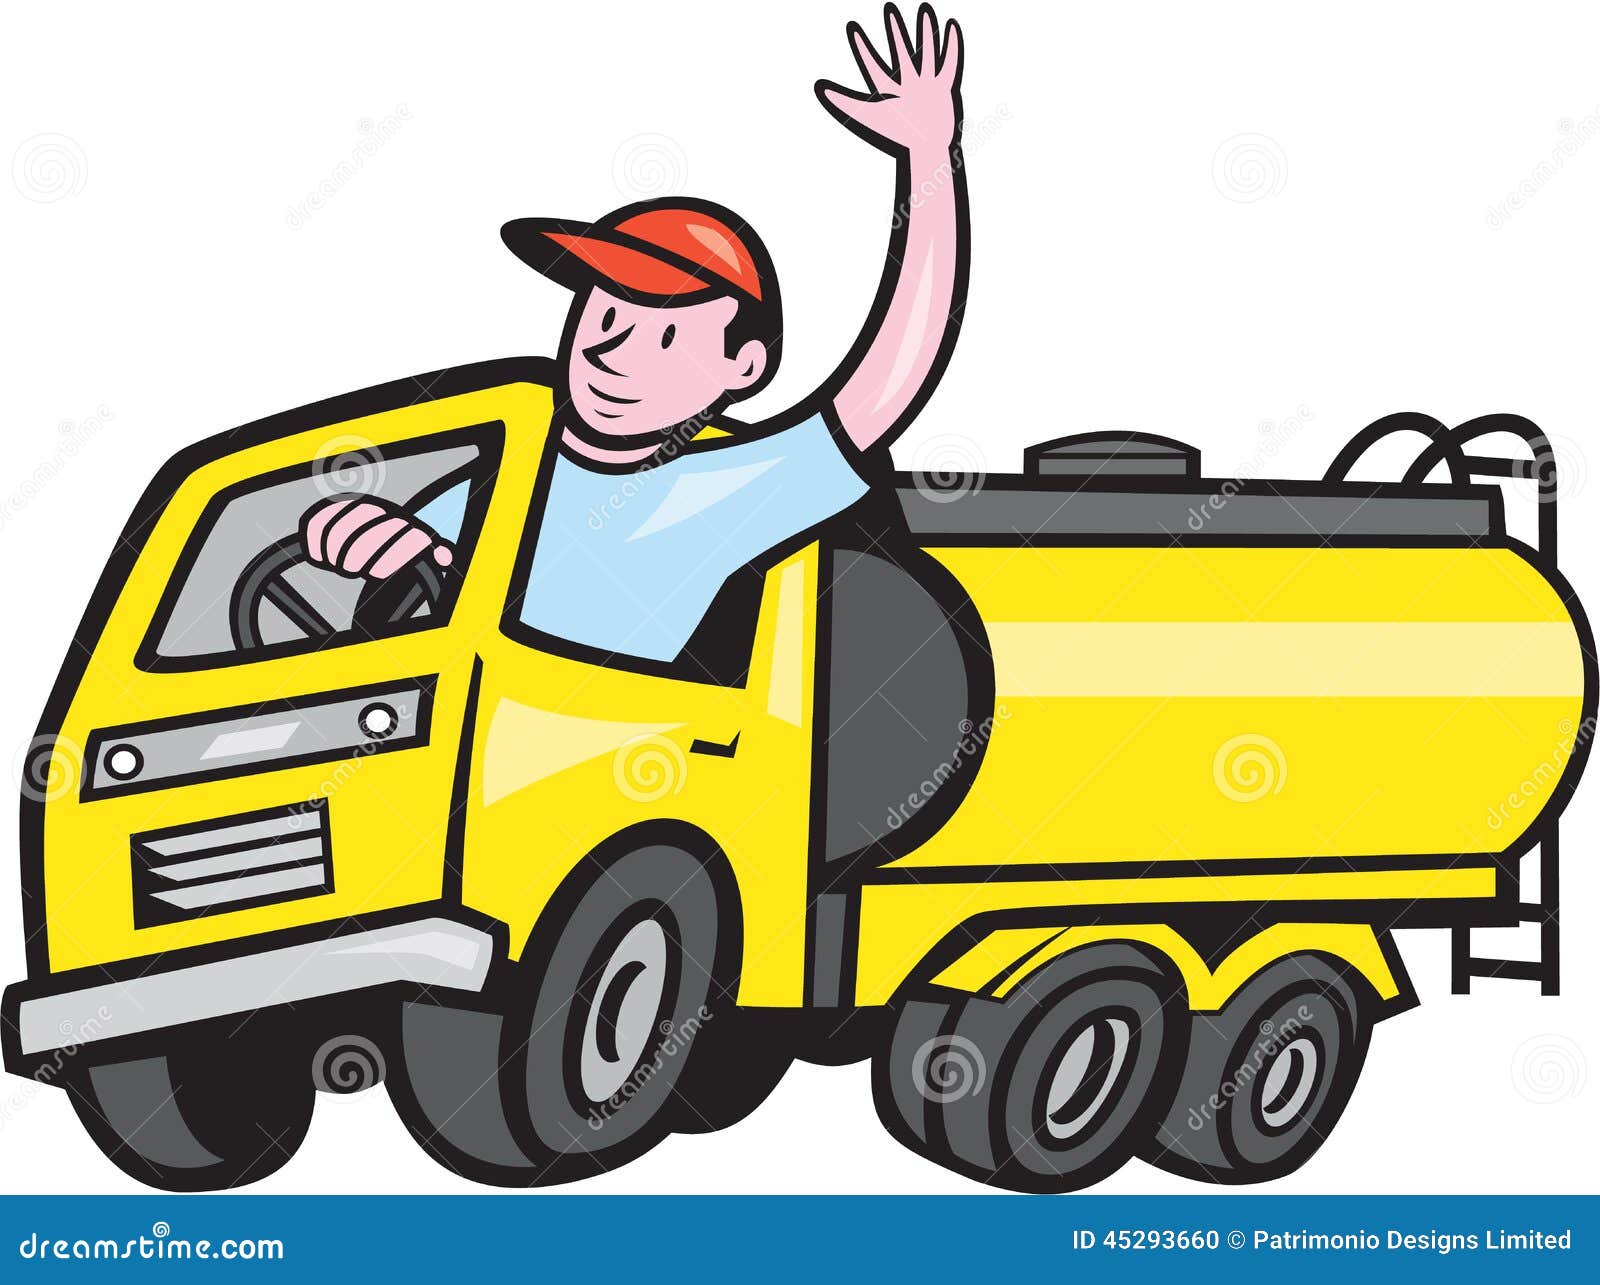 [Image: tanker-truck-driver-waving-cartoon-illus...293660.jpg]